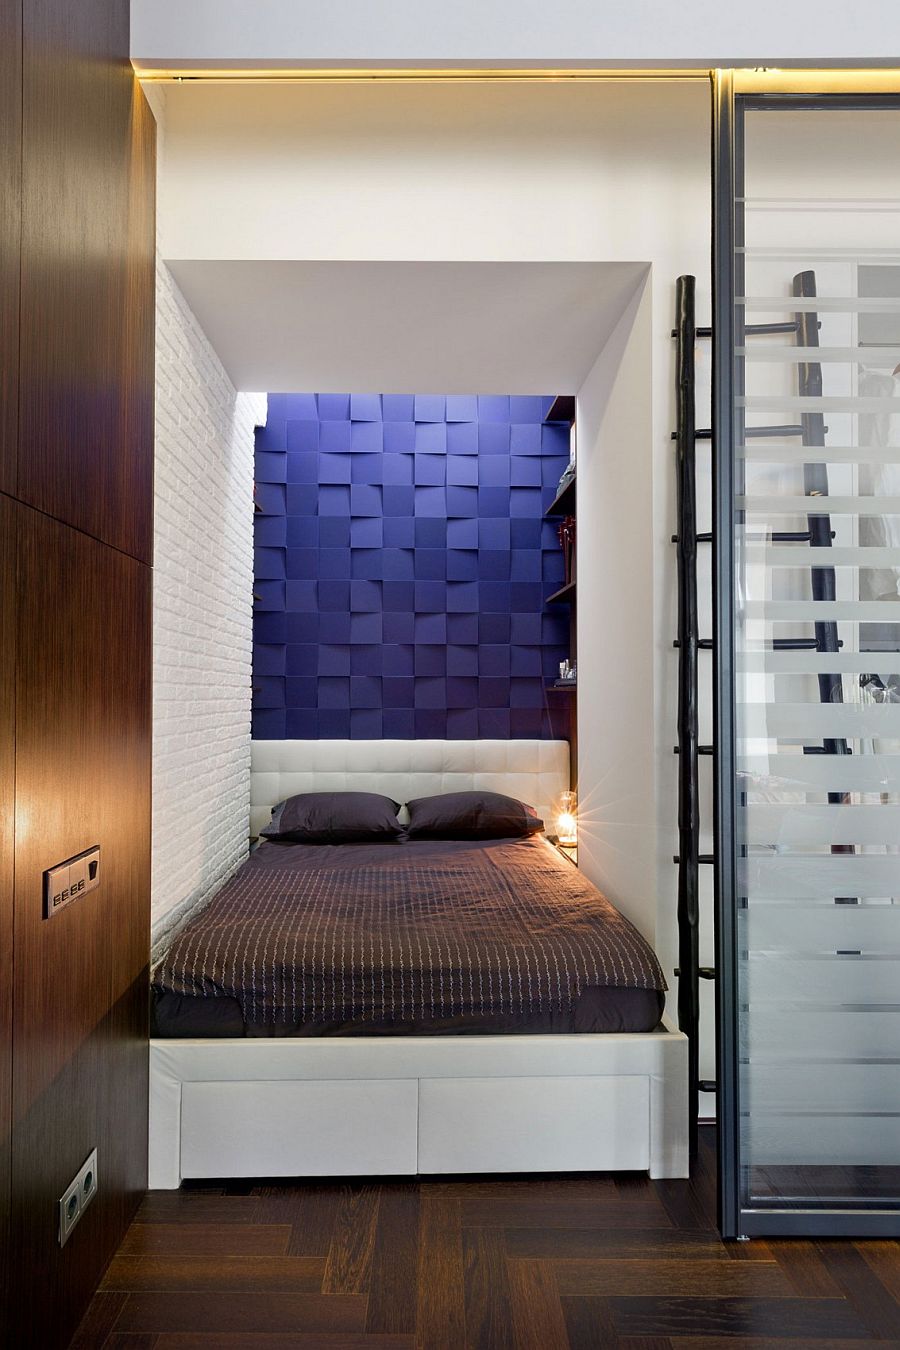 Lovely 3D wall panels breathe life into the tiny bedroom